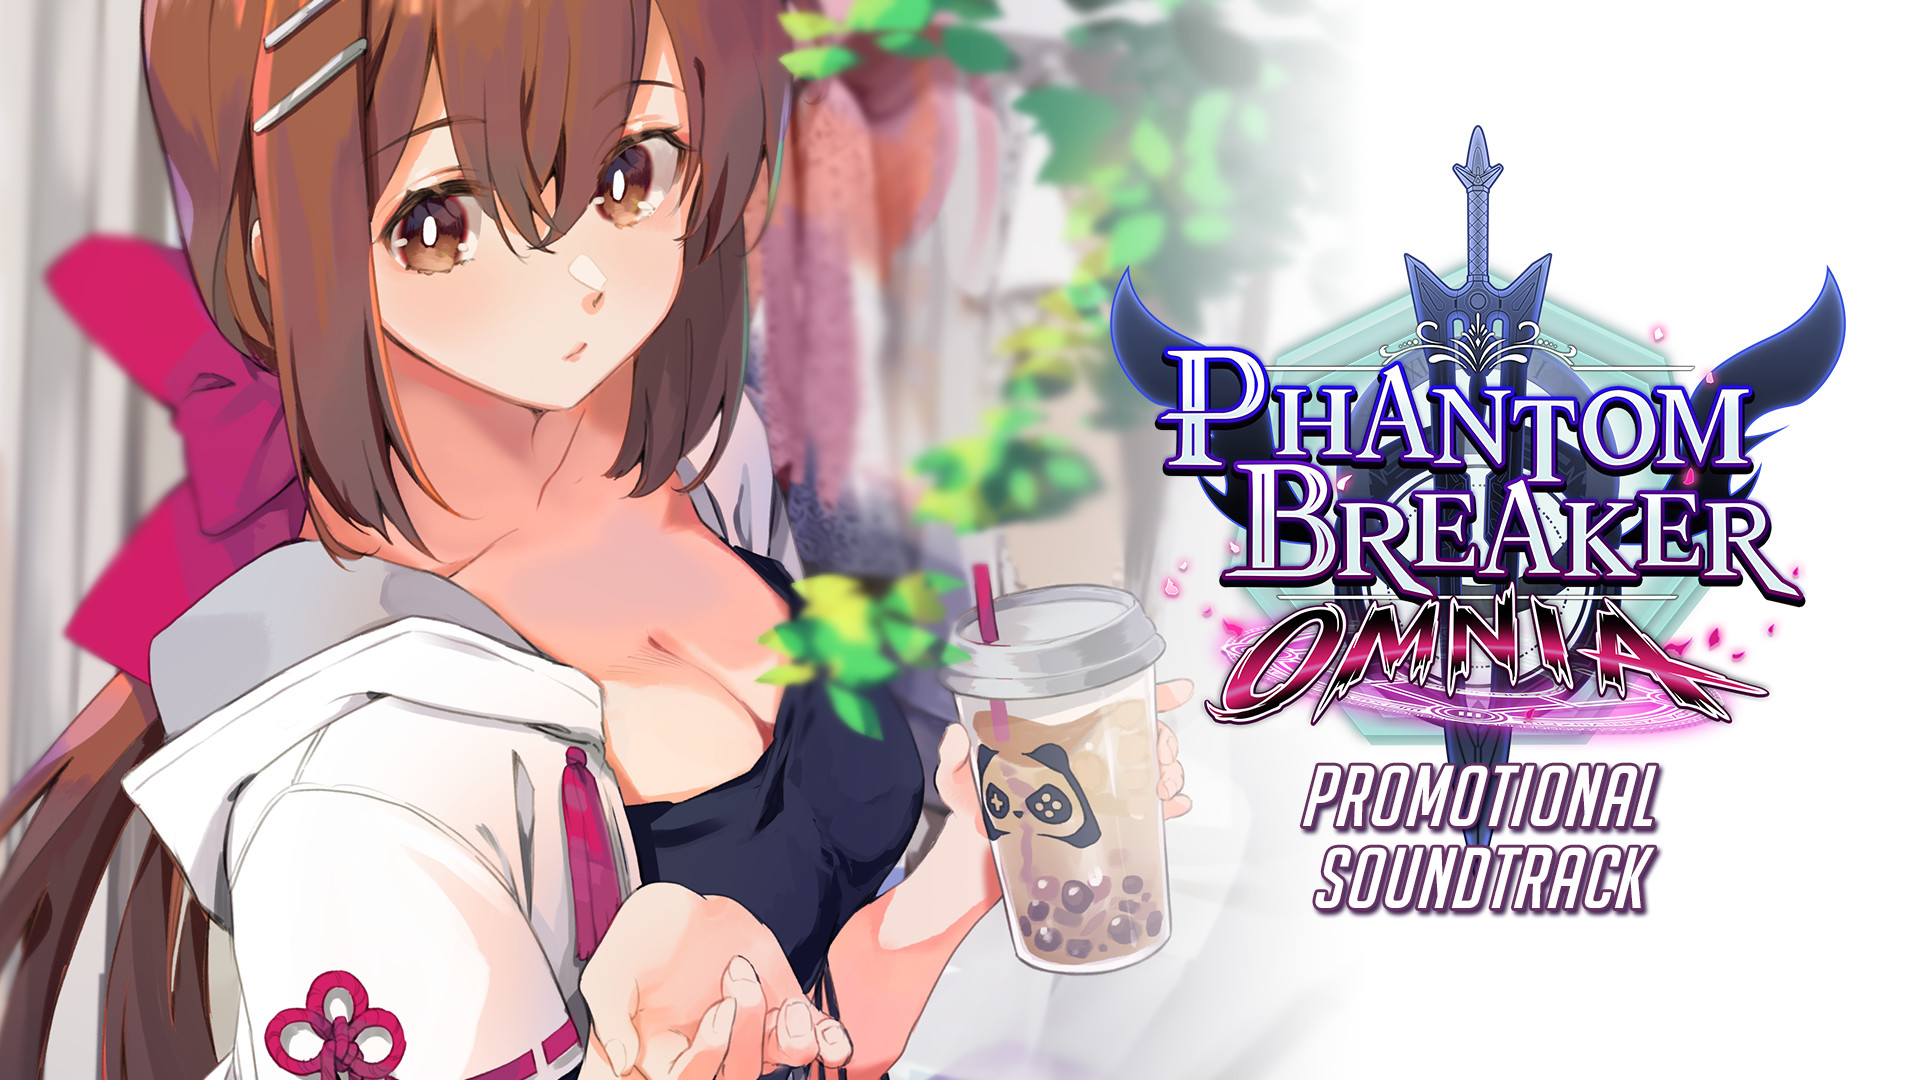 Phantom Breaker: Omnia Promotional Soundtrack Featured Screenshot #1